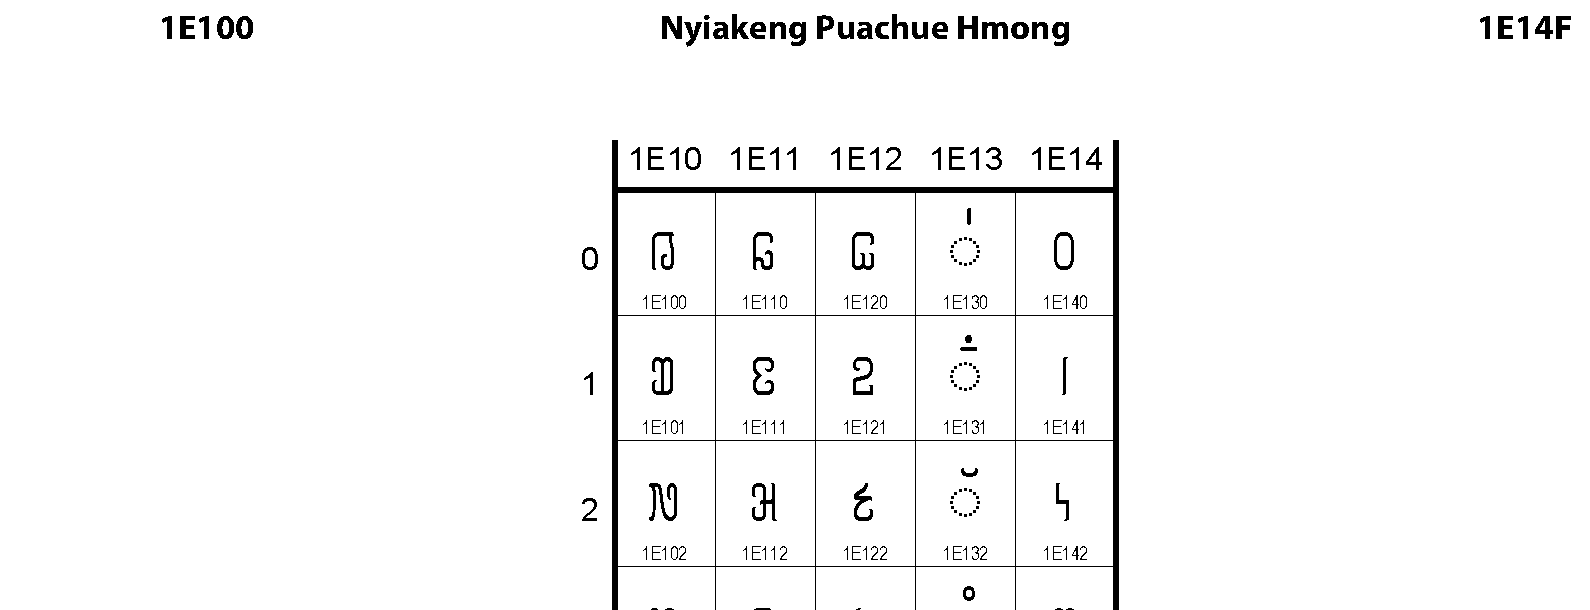 Unicode - Nyiakeng Puachue Hmong